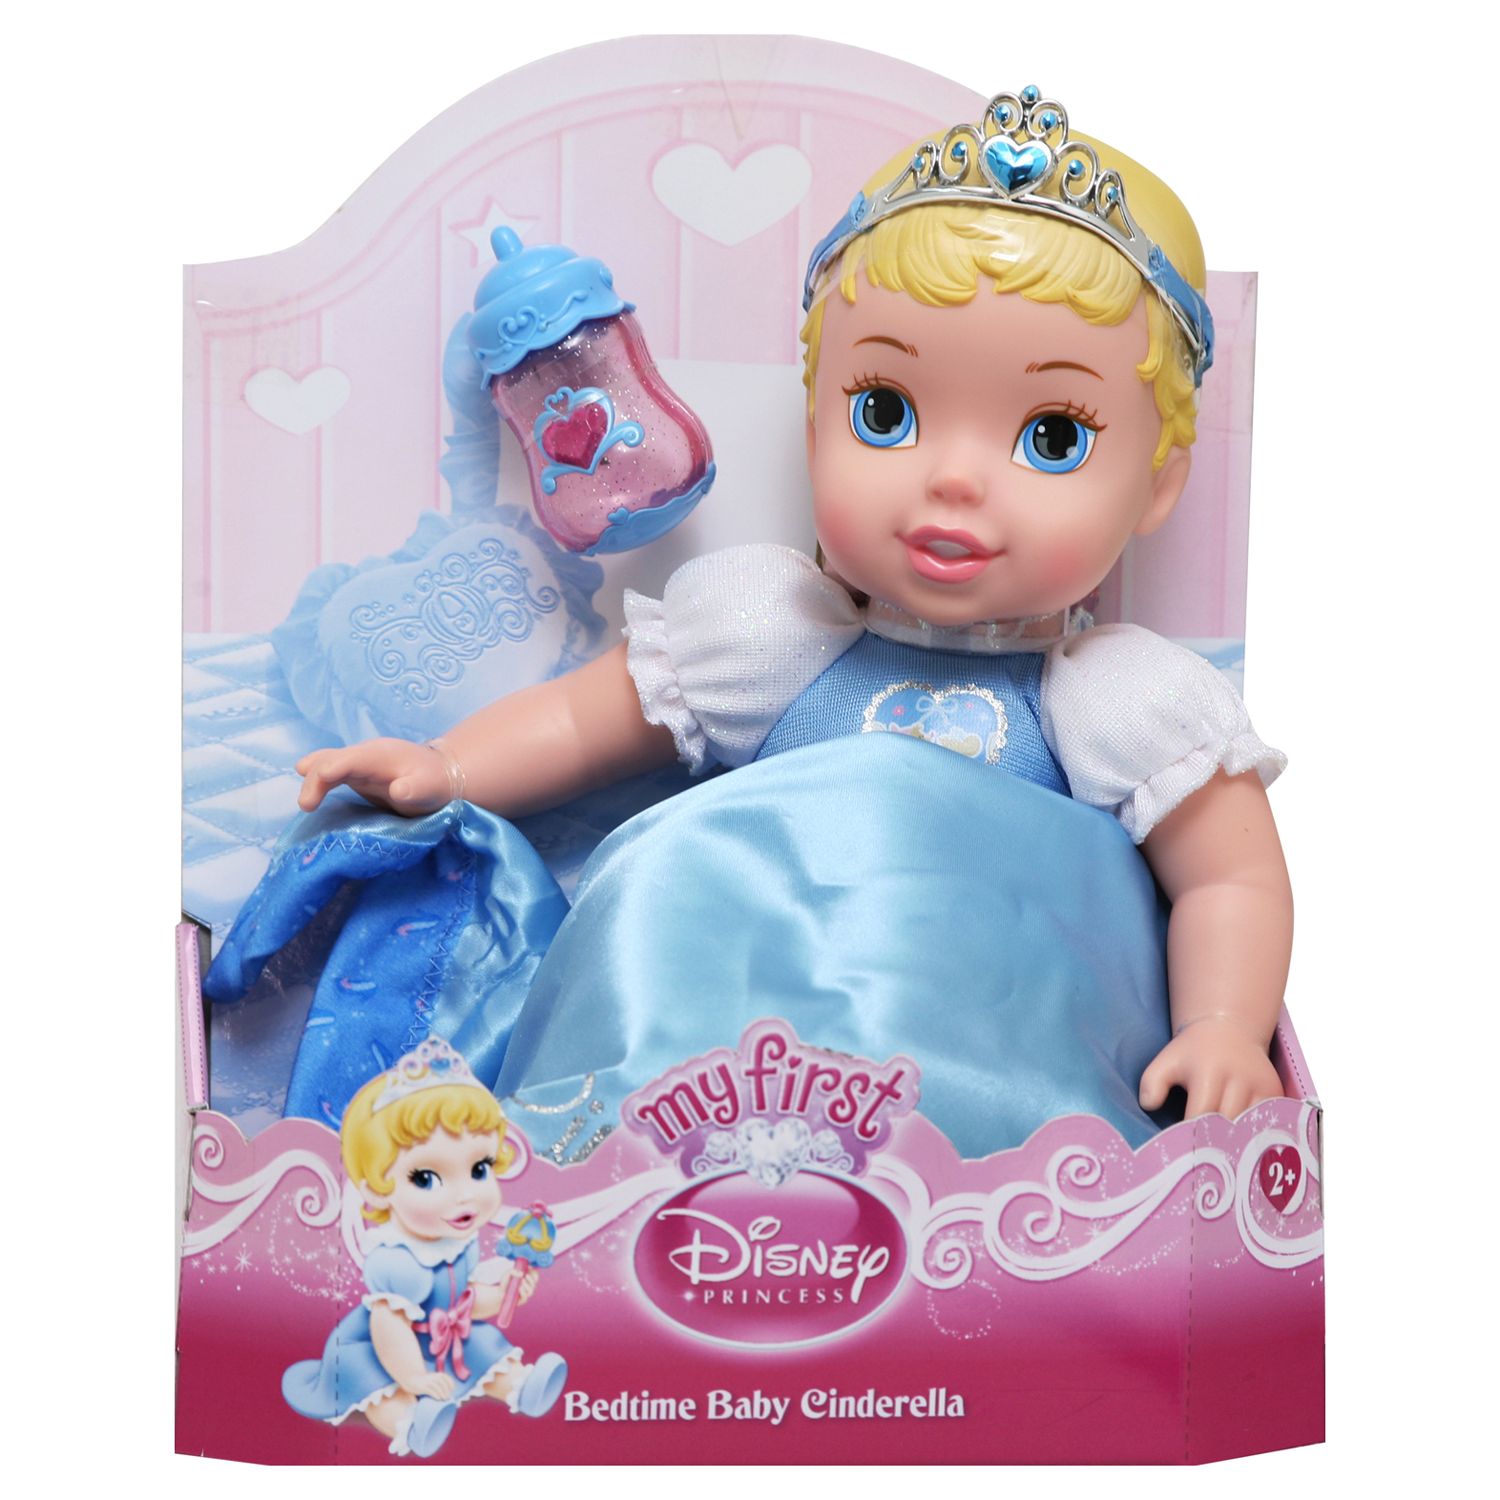 disney princess baby dolls